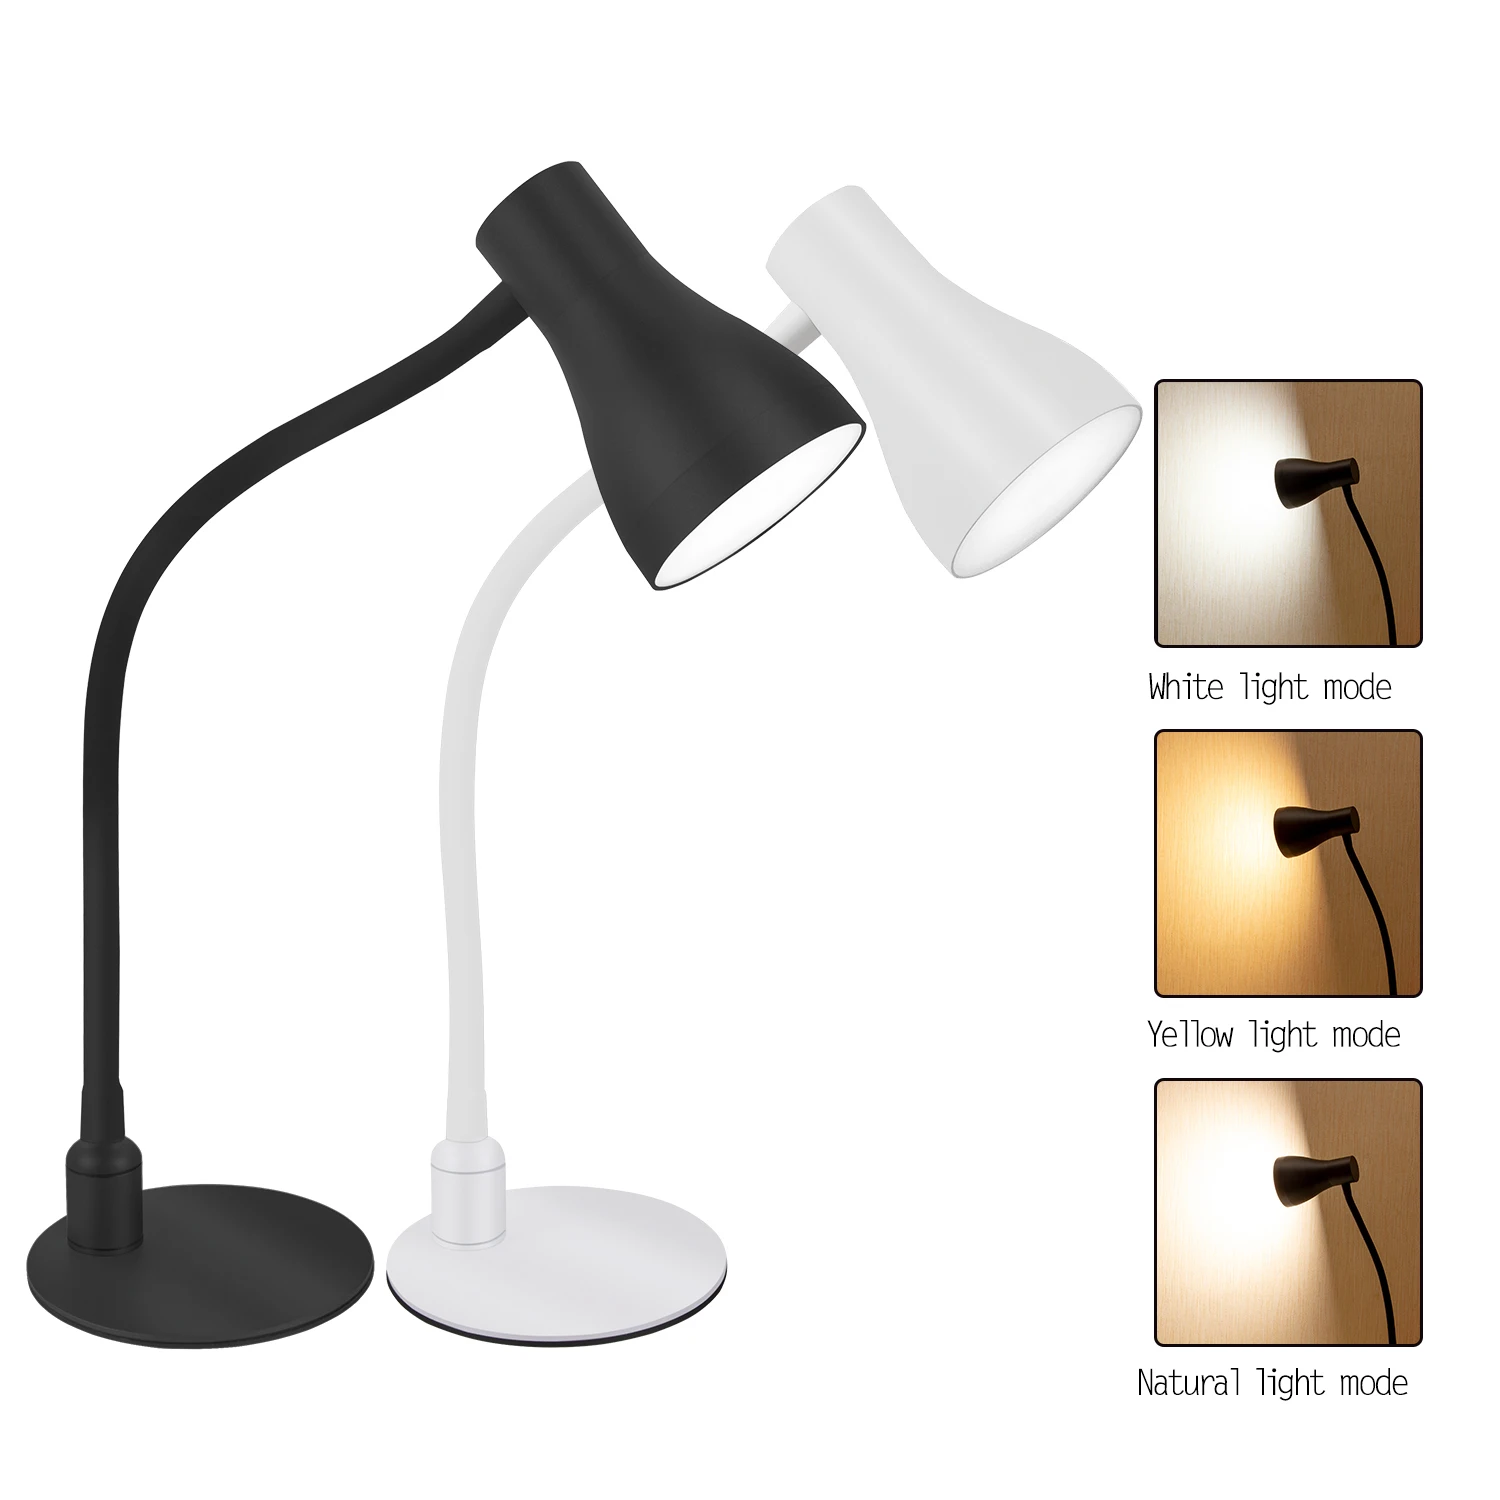 color negro Gladle Protable cisne Flexible de 2 Dual Arms 4 LED lámpara de luz de lectura con pinza